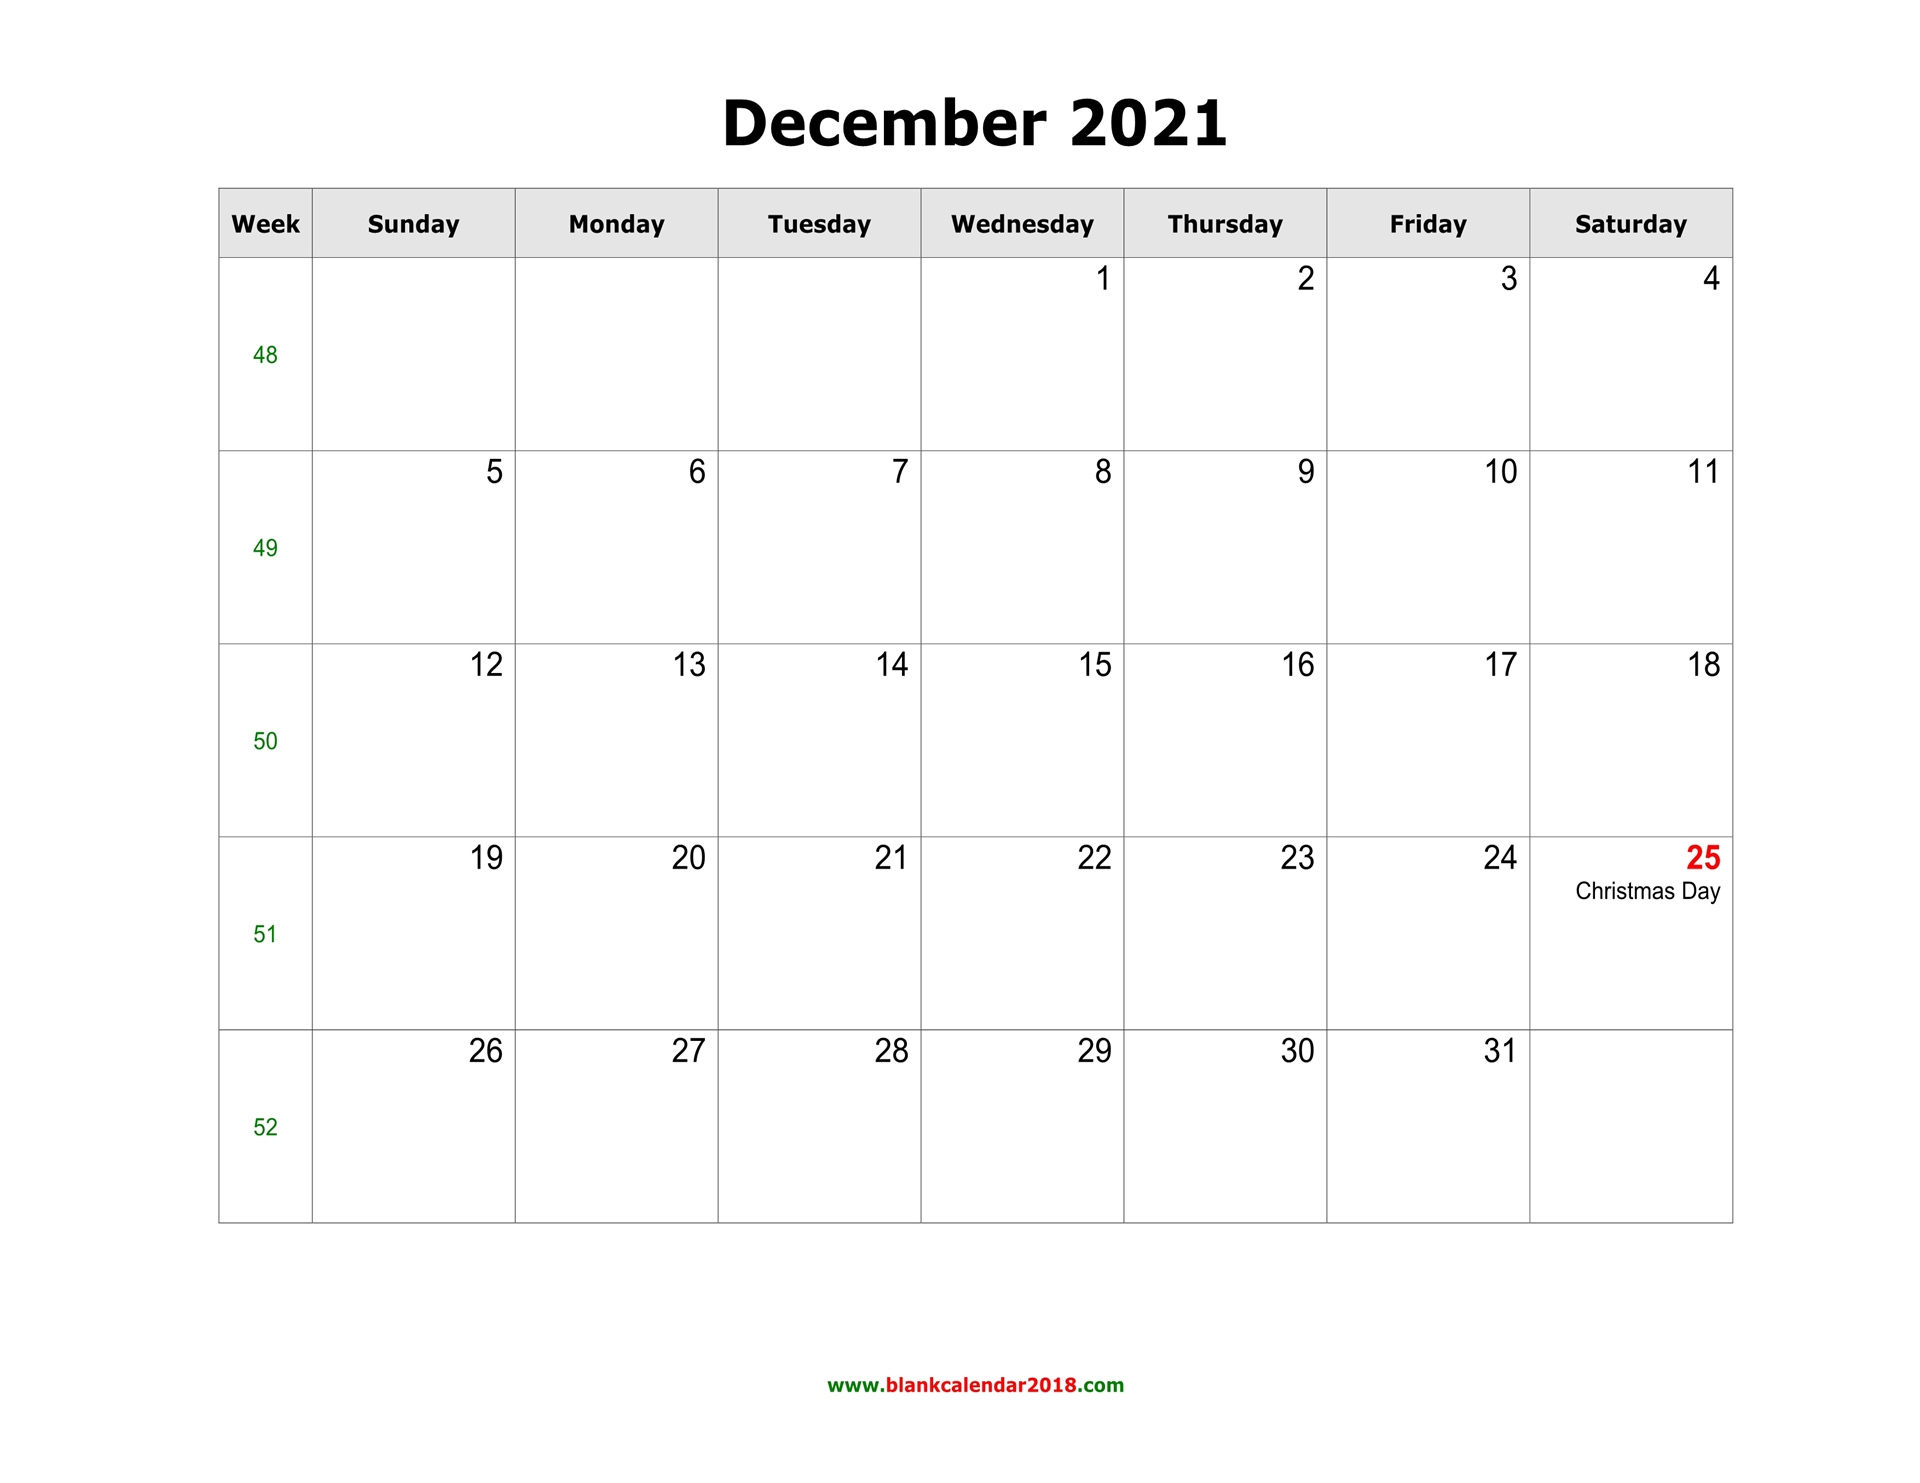 Blank Calendar For December 2021 December 2021 Day Calendar